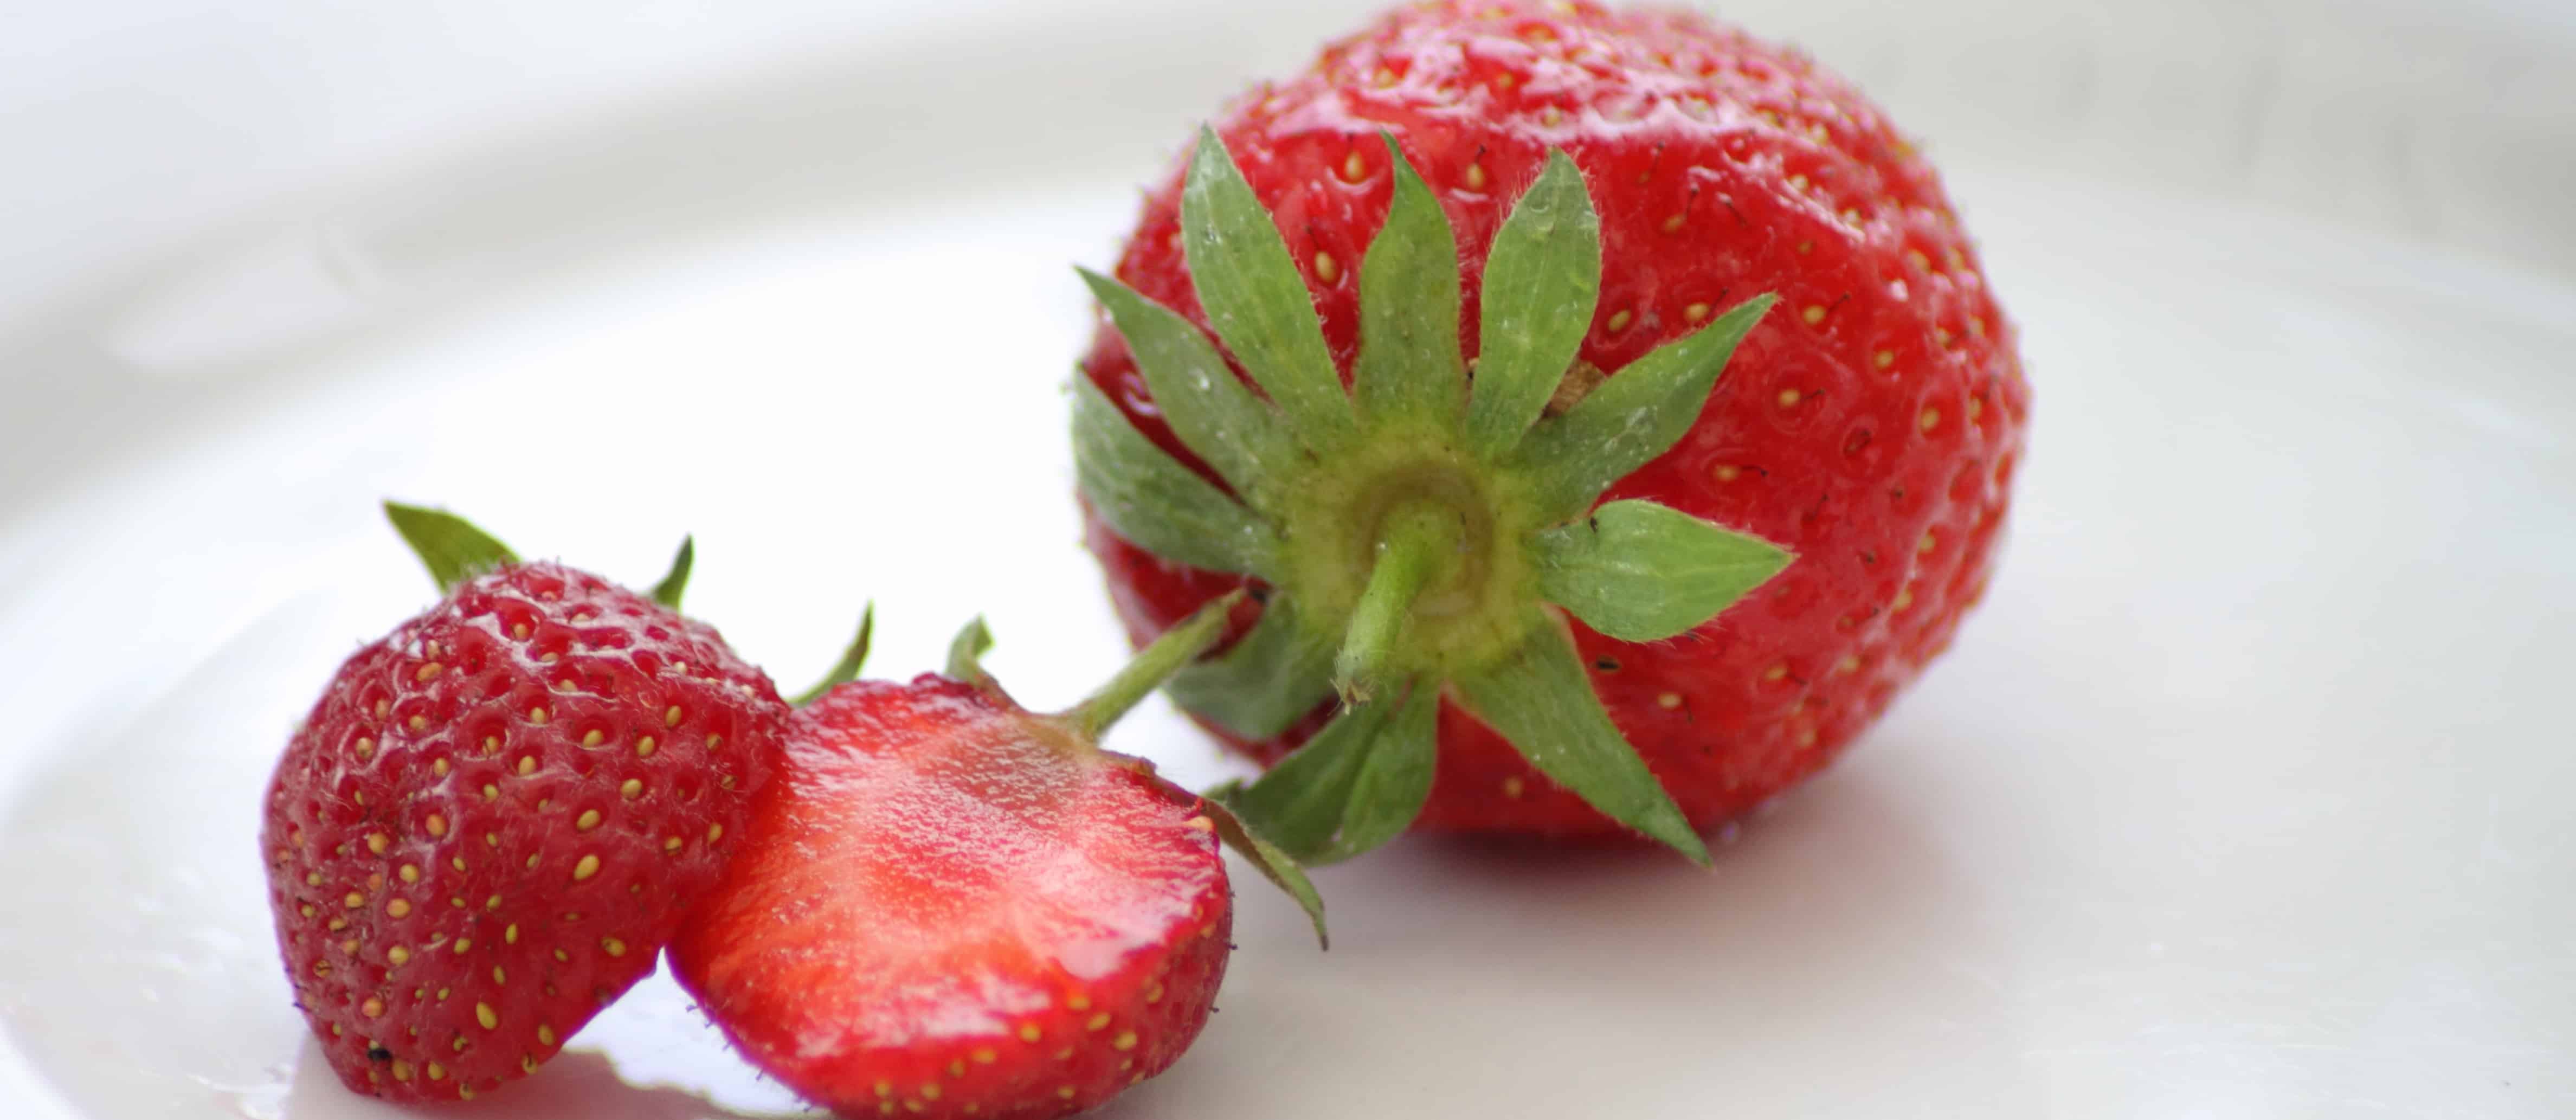 Strawberries Can Reverse Precancerous Progression